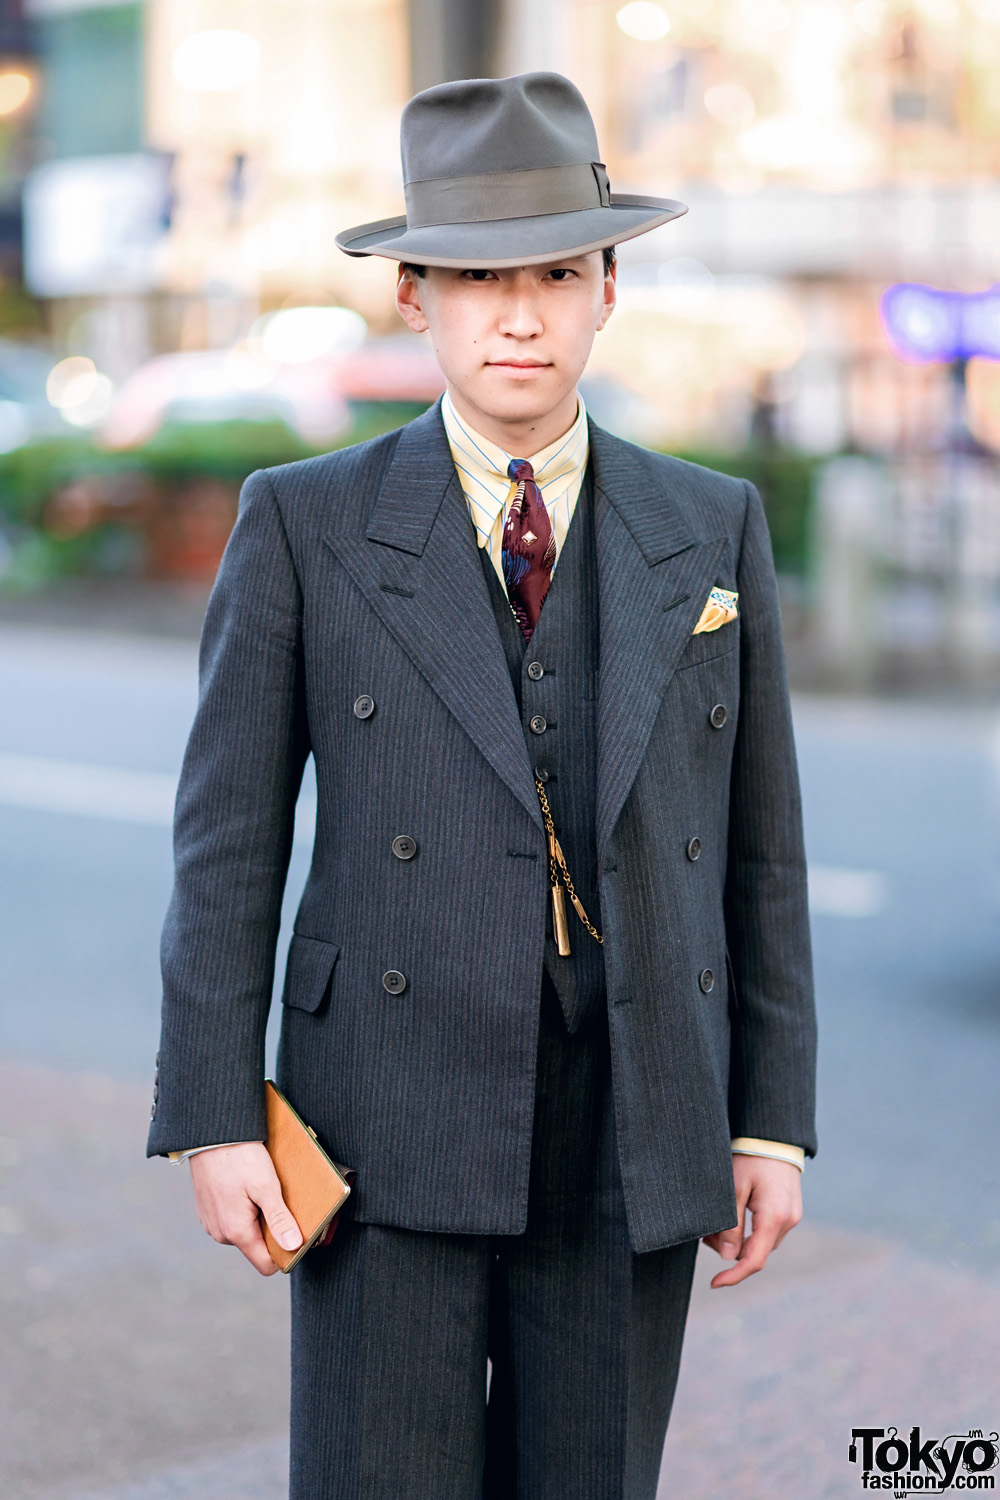 Dapper Tokyo Street Fashion w/ Vintage 1940’s Stetson Hat, Pocket ...